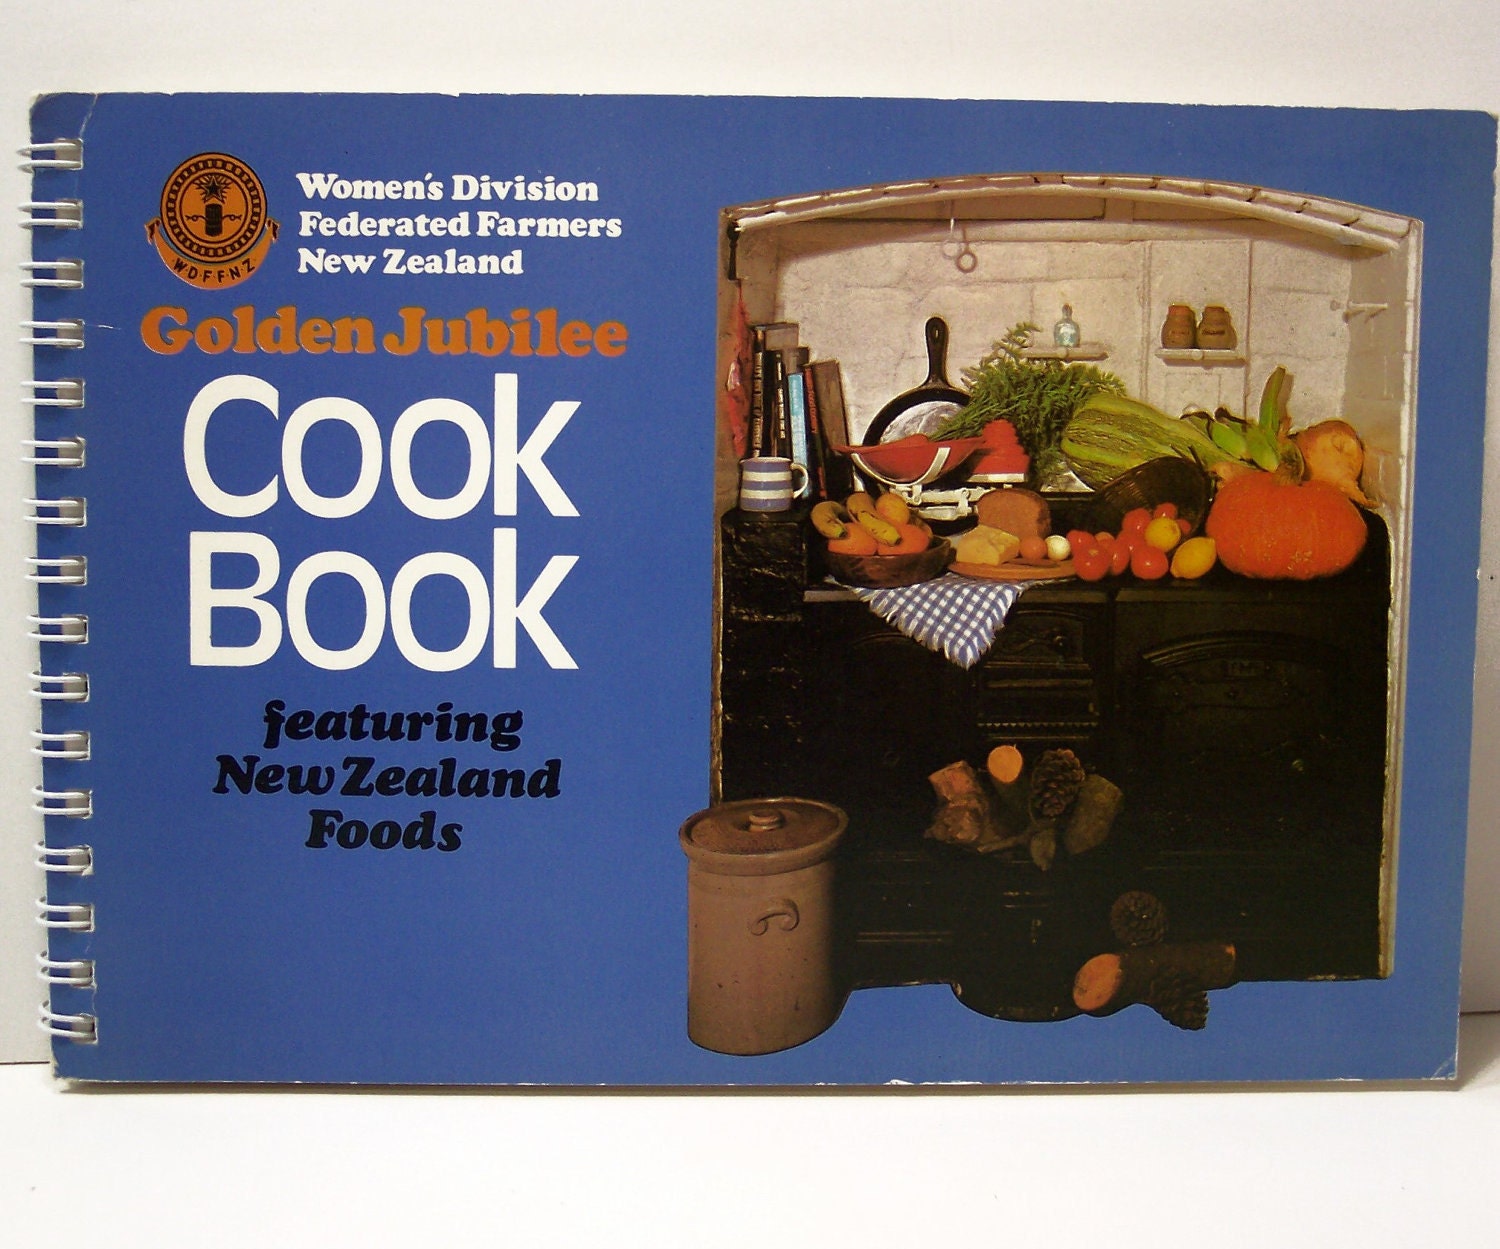 jubilee cookbook review